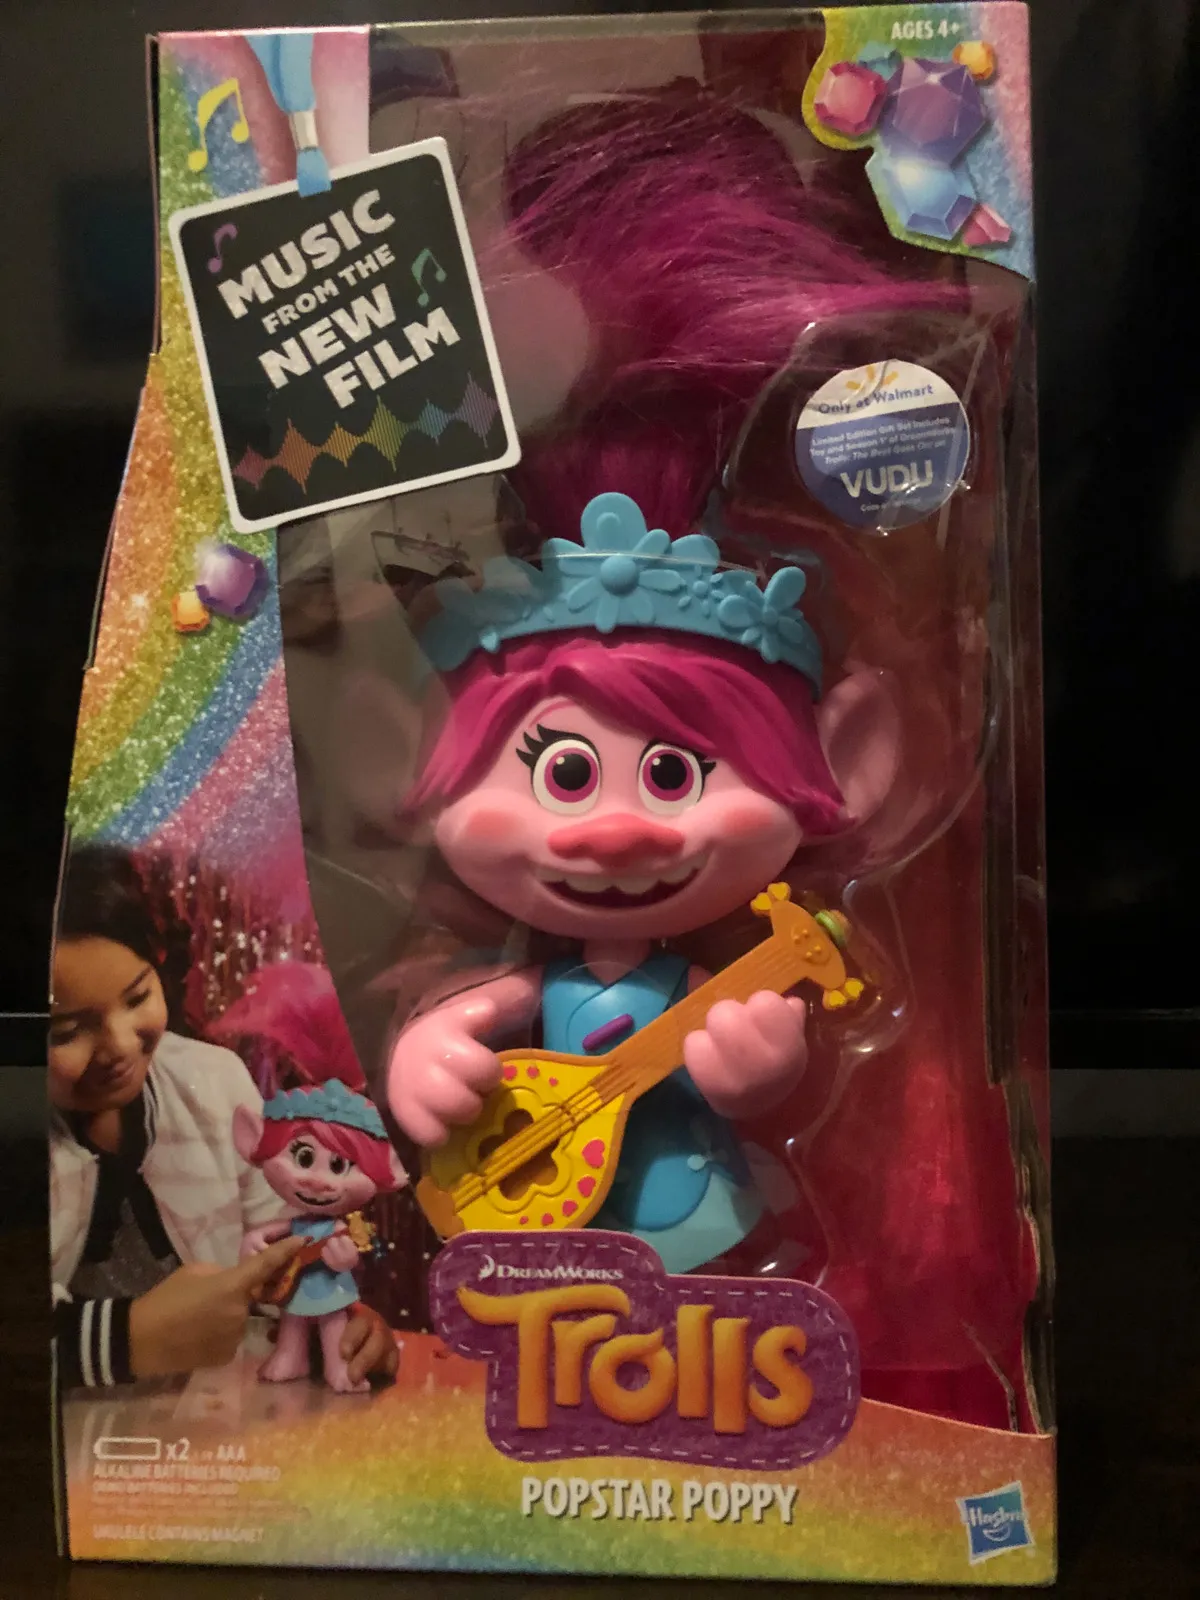 DreamWorks Trolls Popstar Poppy Singing Doll